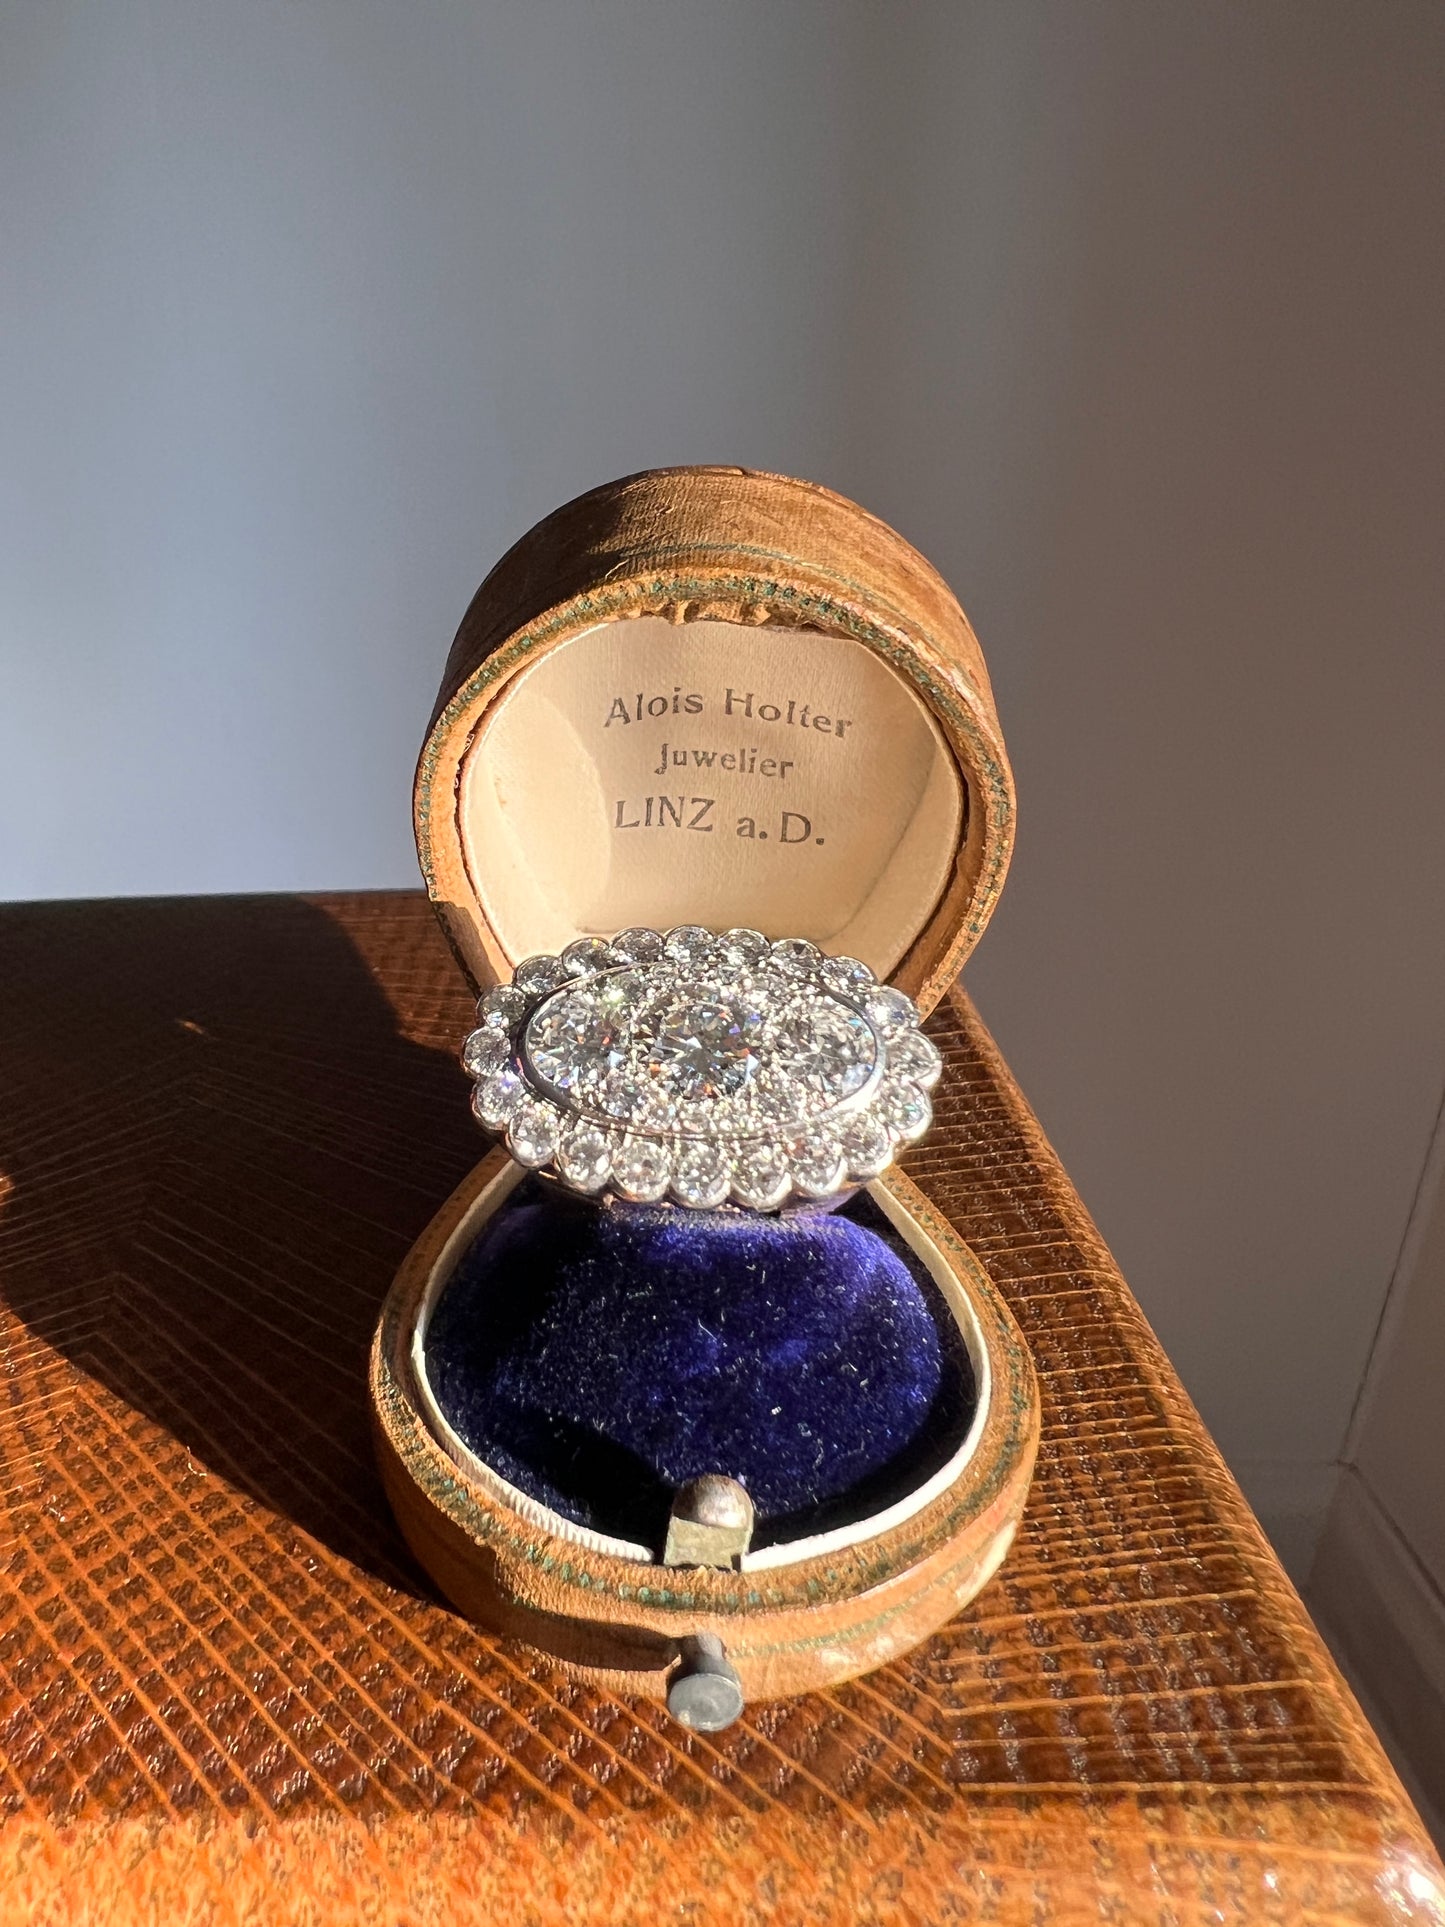 Vintage VAN CLEEF & ARPELS Boxed 5.25 Carat Transitional Cut Diamond Ring Heavy 22g 18k Gold Platinum Vtg to Antique Art Deco Special in Original Box